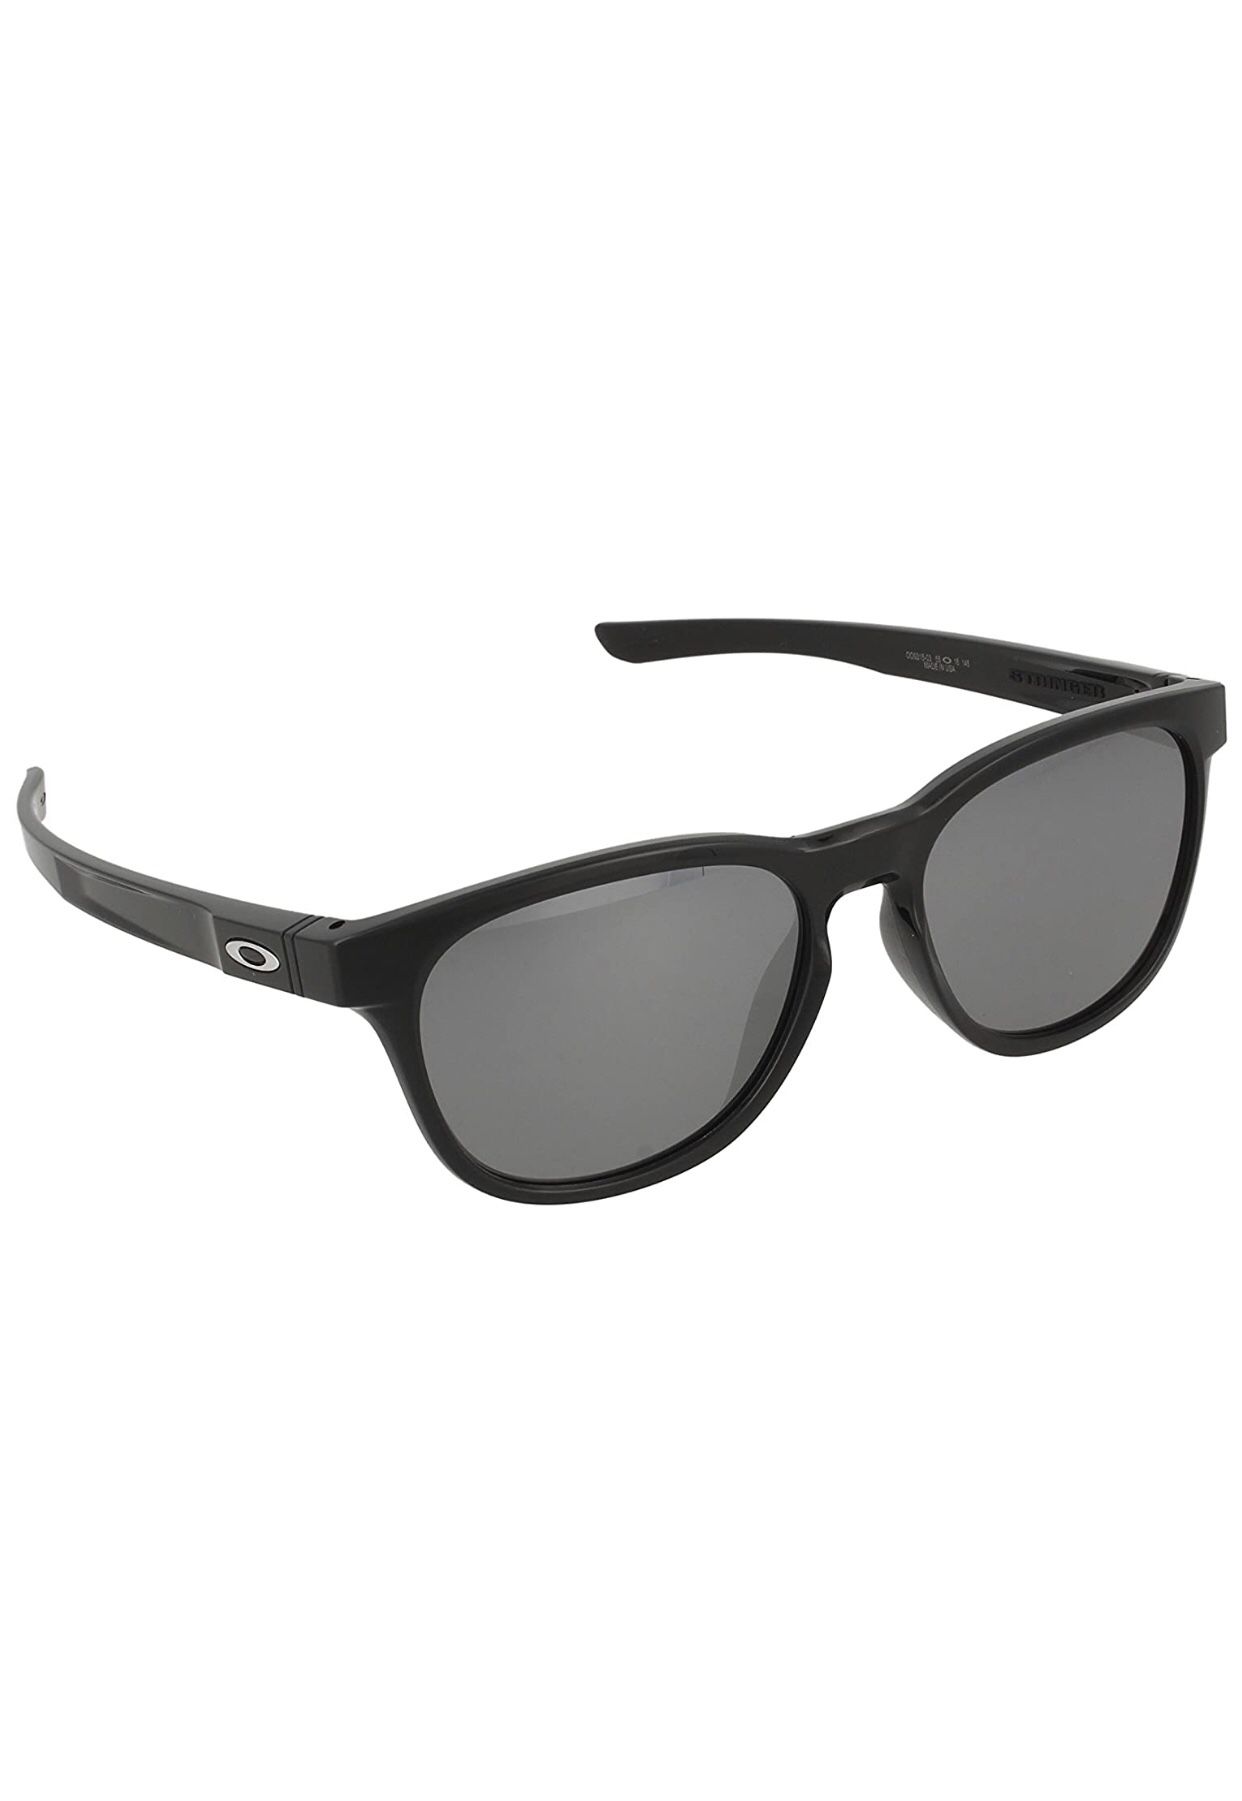 BNWT Oakley Sunglasses - Stringer Polished Black Iridium ~ $143 MSRP ~